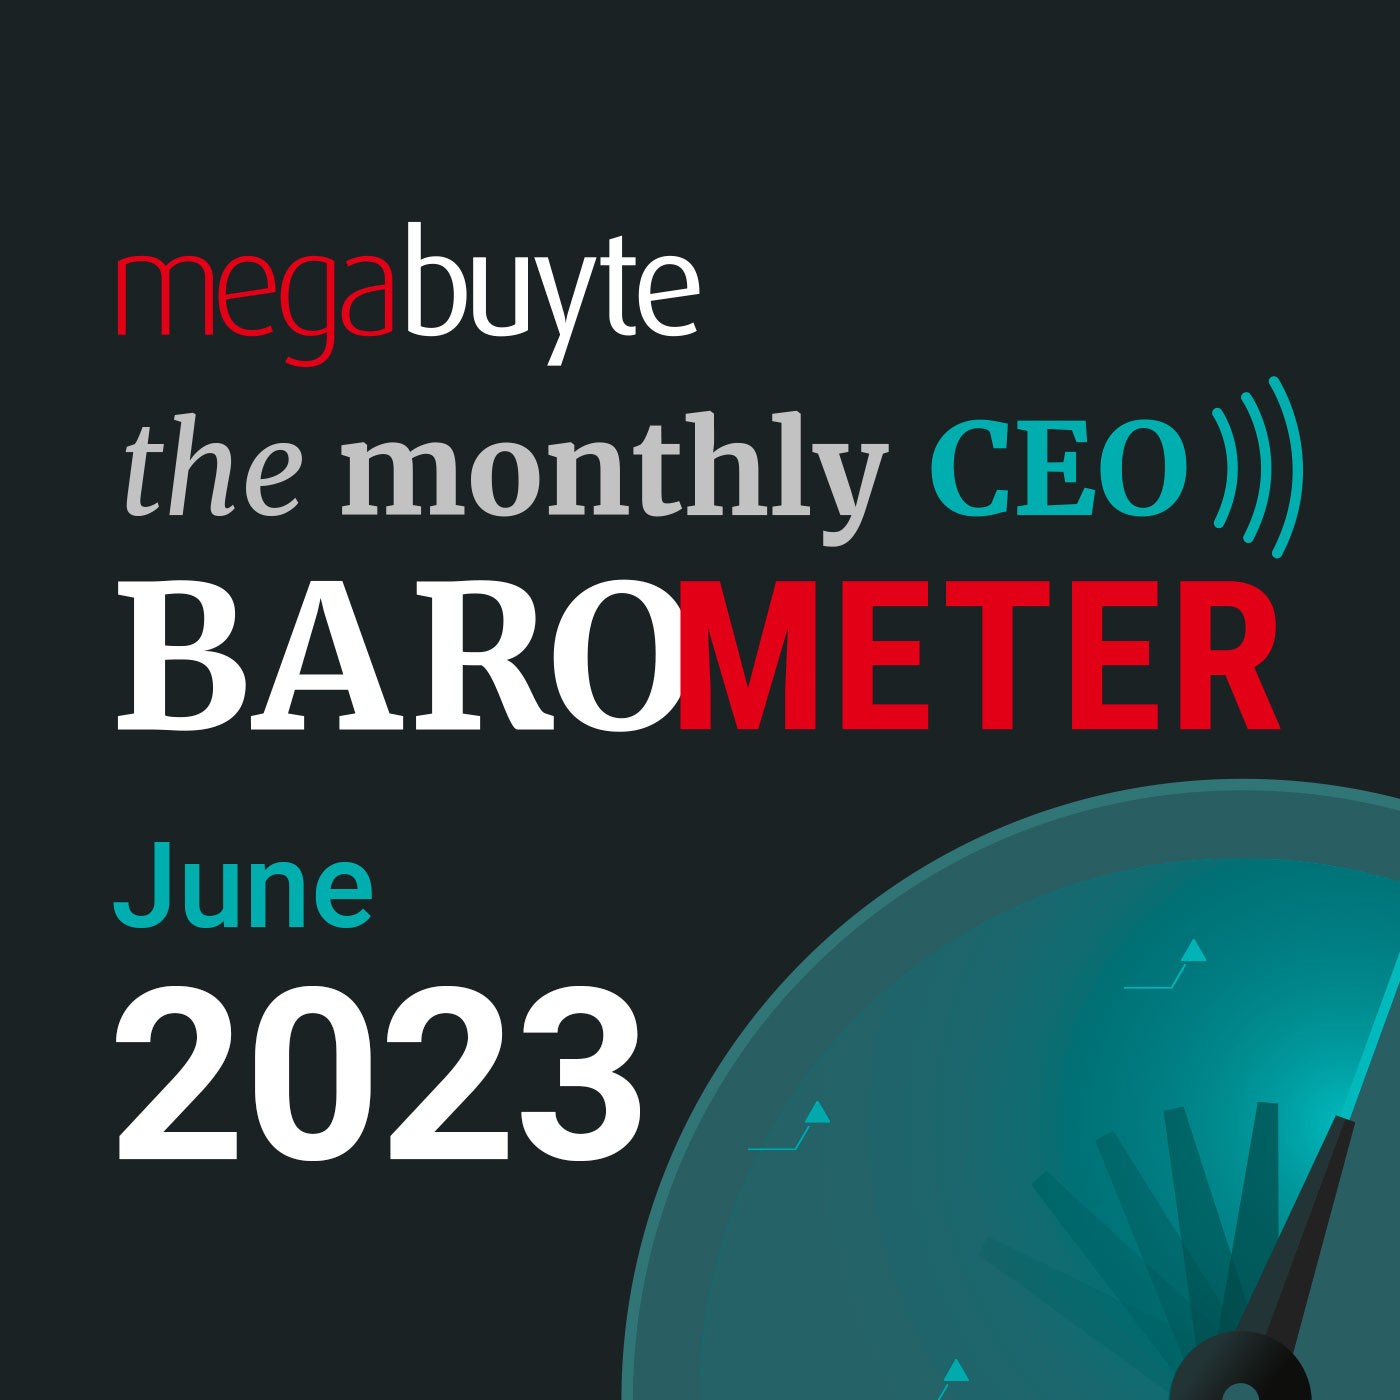 Megabuyte CEOBarometer - June 2023 update